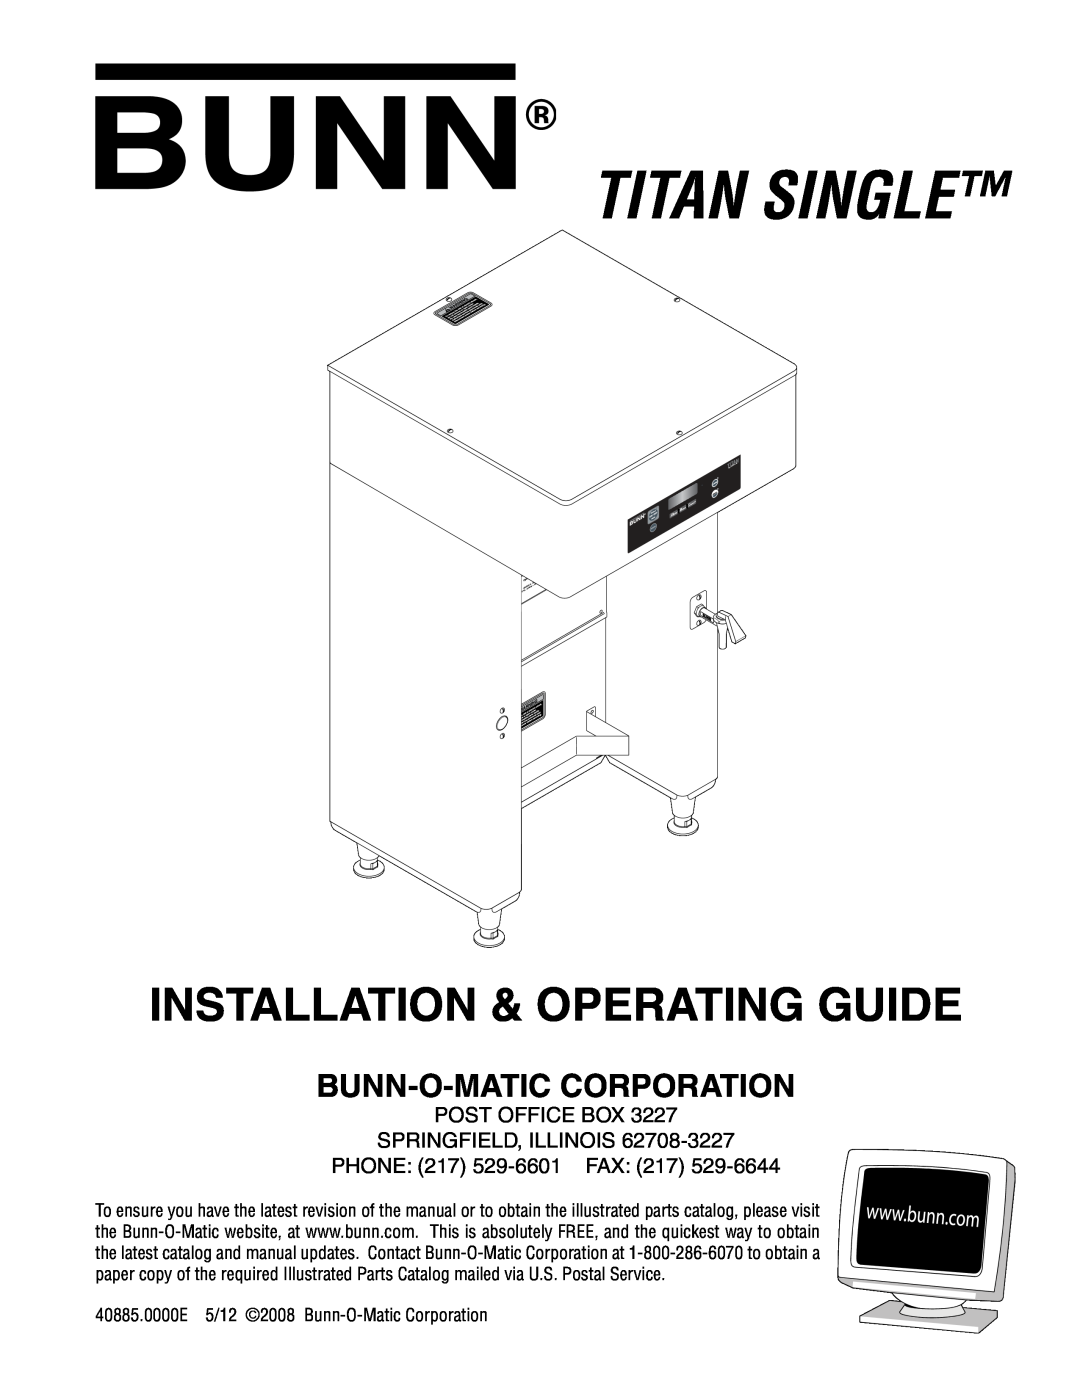 Bunn 40885.0000E manual Titan Single, Installation & Operating Guide, Bunn-O-Matic Corporation 